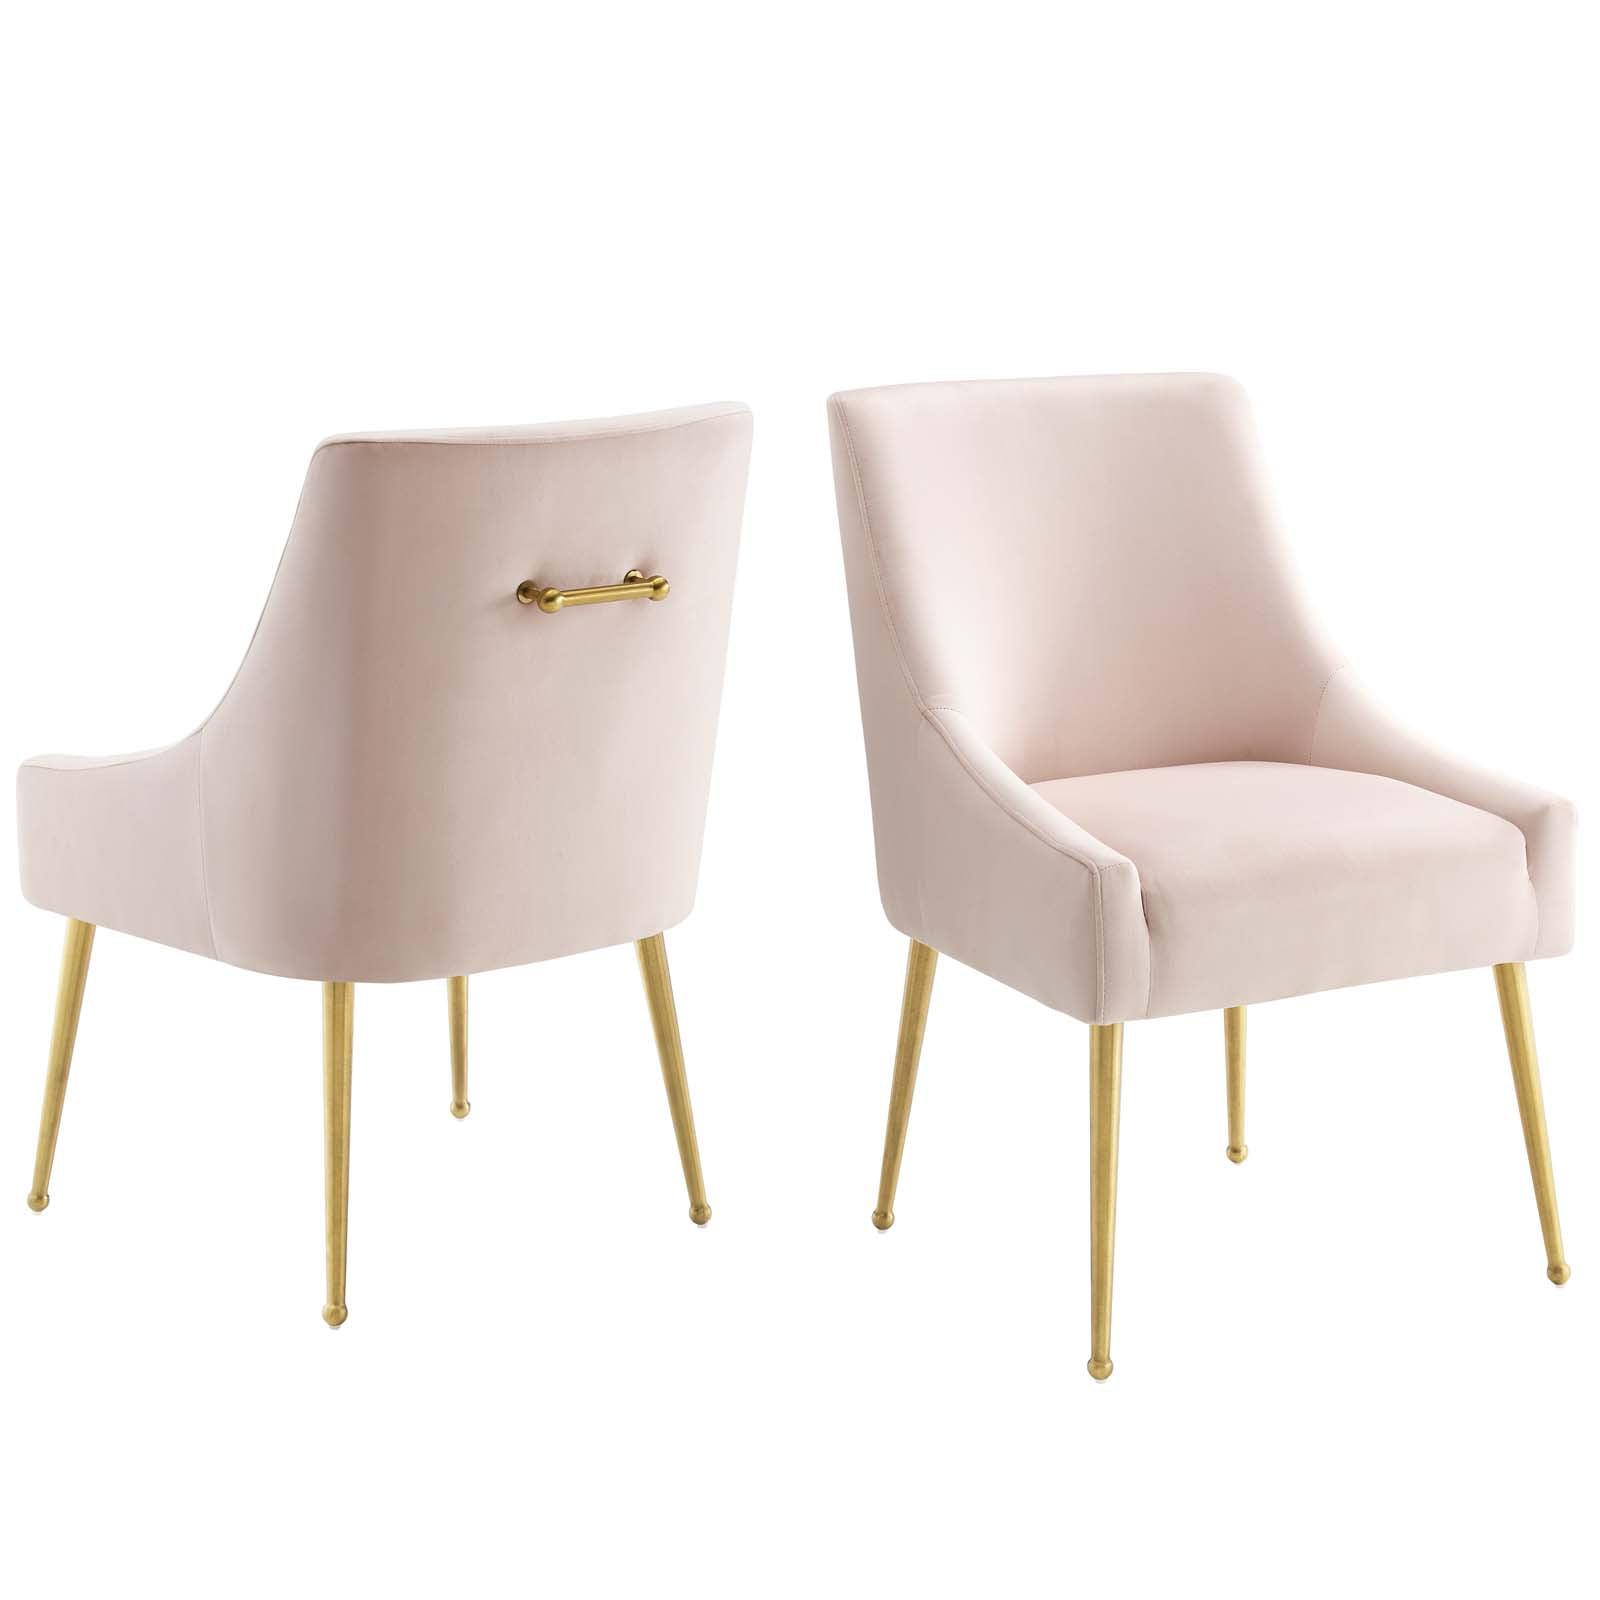 Elegant Pink Velvet Upholstered Dining Chair Set with Brushed Gold Legs